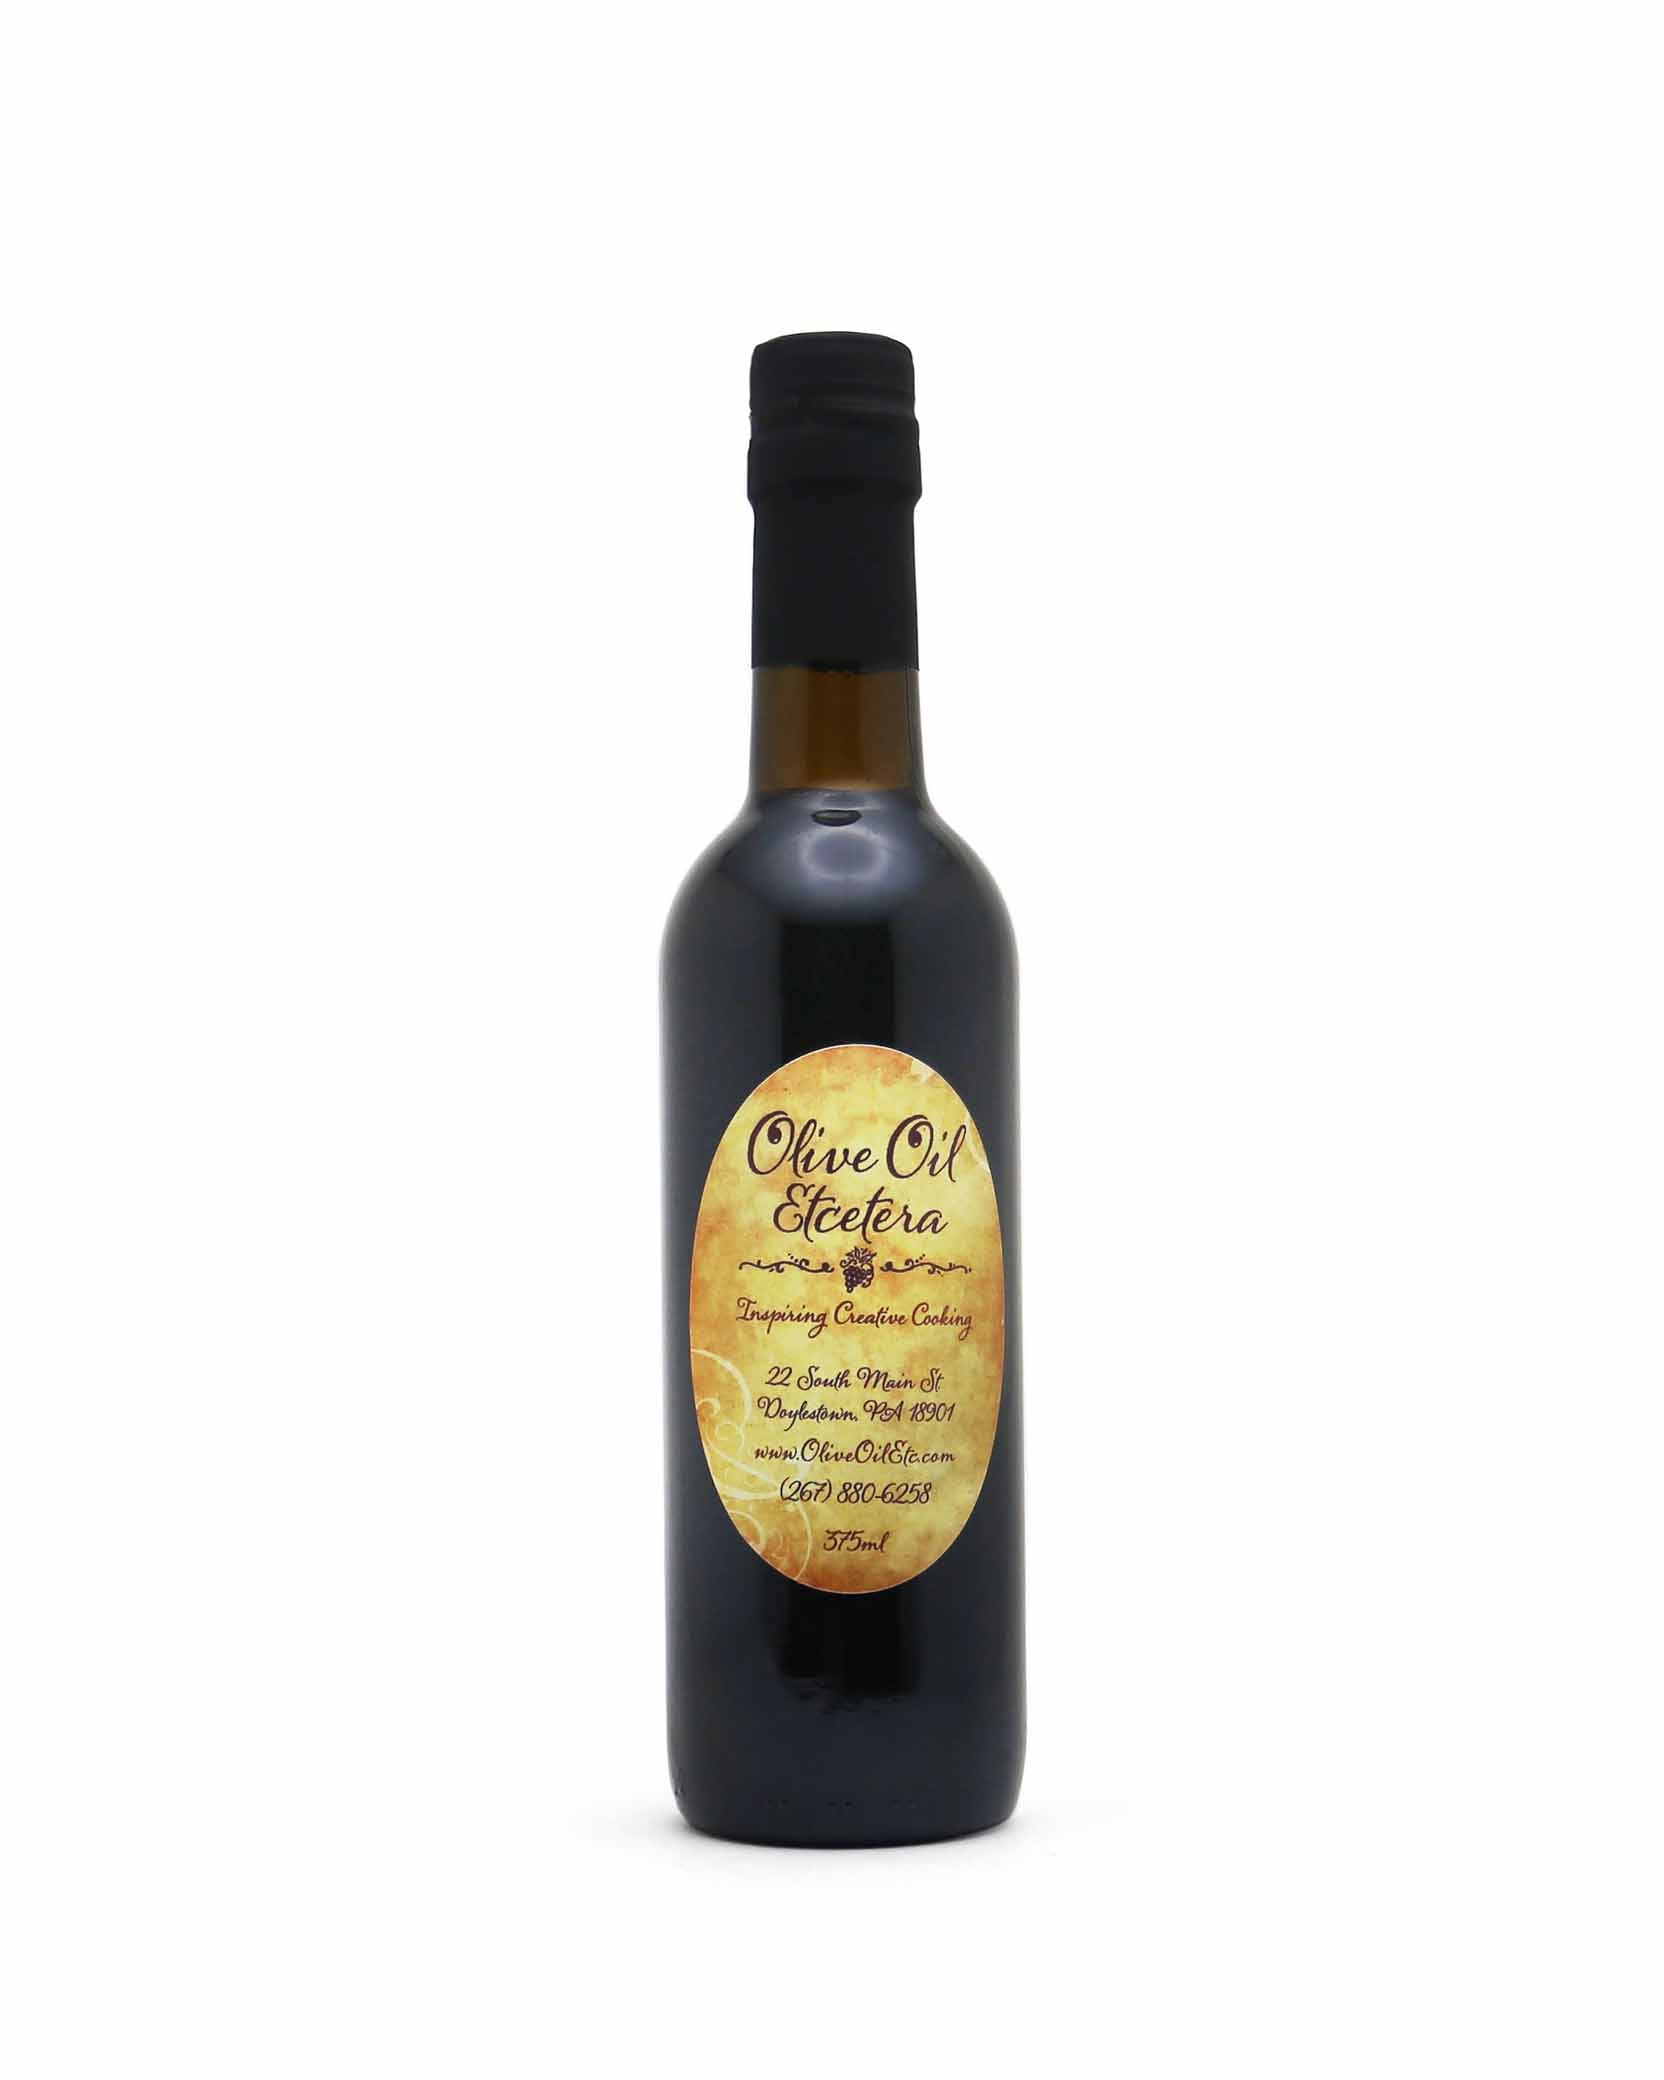 Fresh Basil Olive Oil - Olive Oil Etcetera - Bucks county's gourmet olive oil and vinegar shop